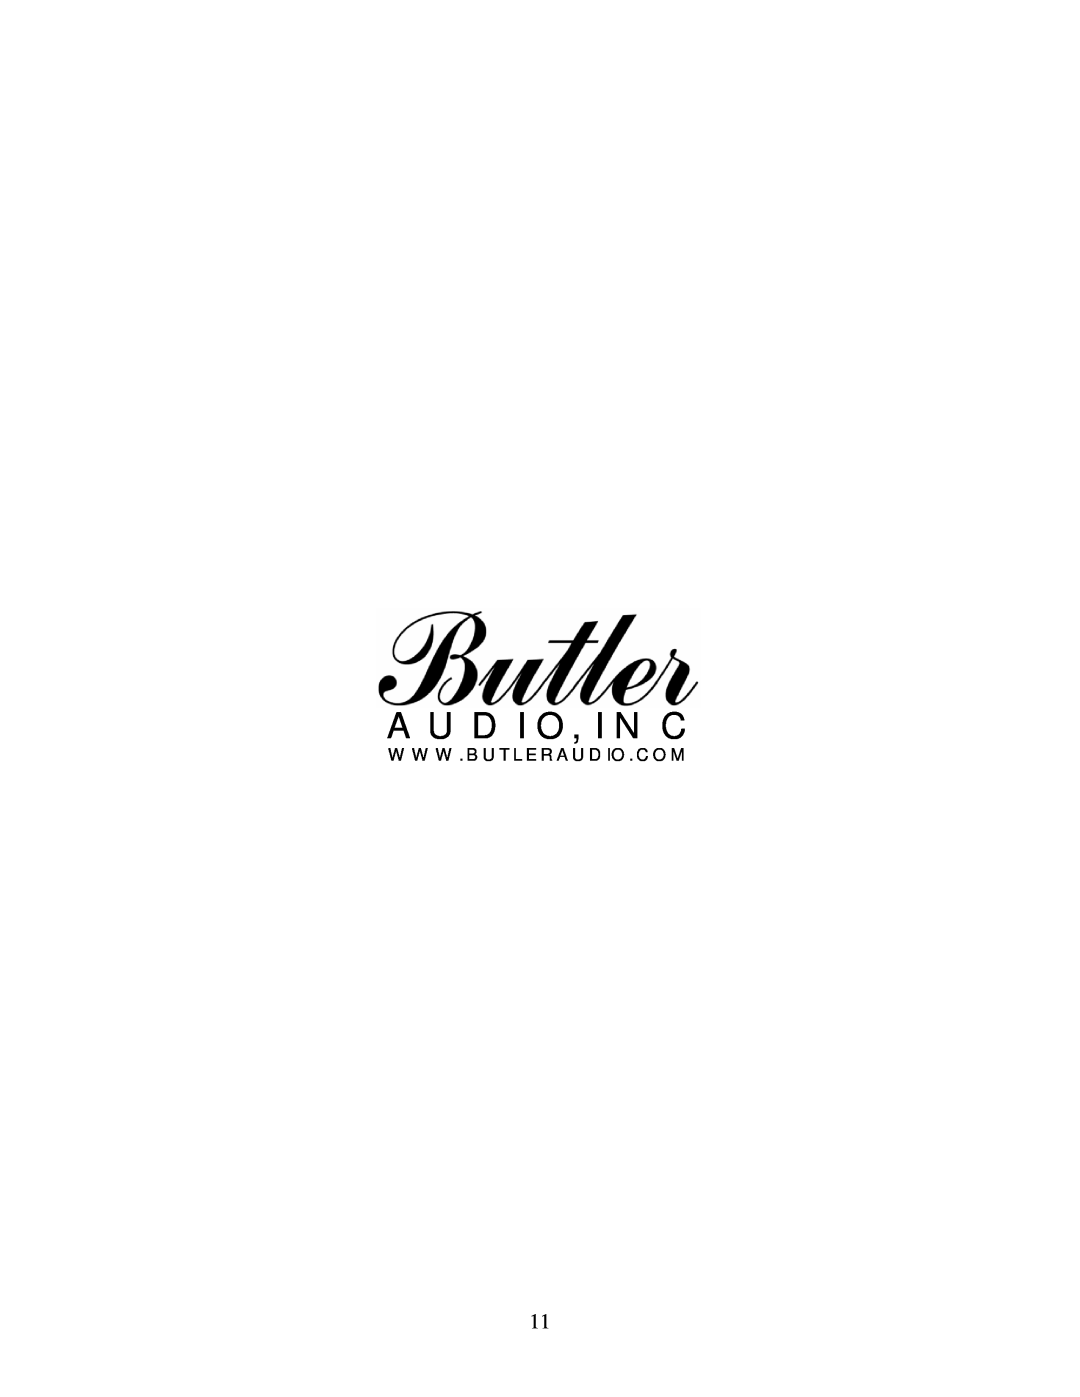 Butler Audio TDB 5150 manual A U D I O, I N C 